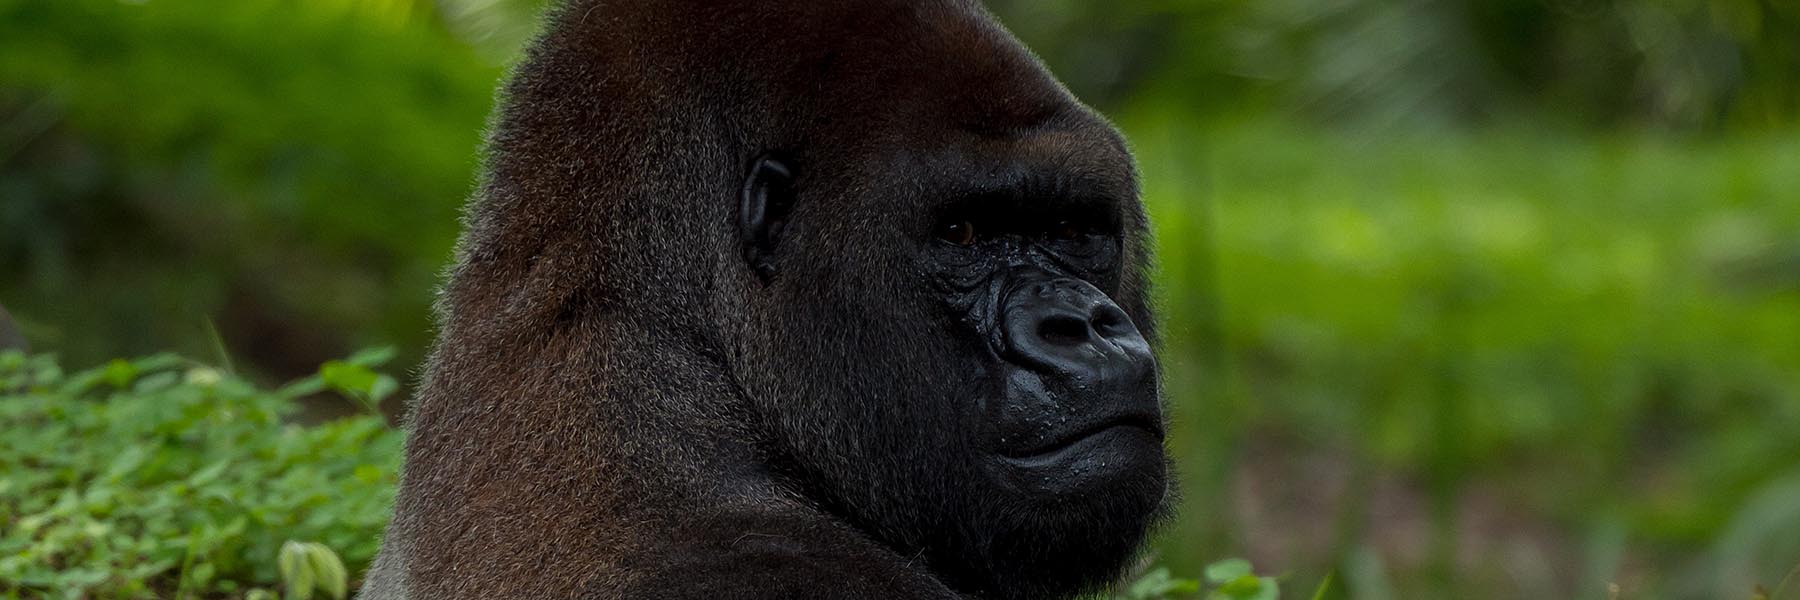 Gorilla, Chimpanzee and Wildlife Uganda